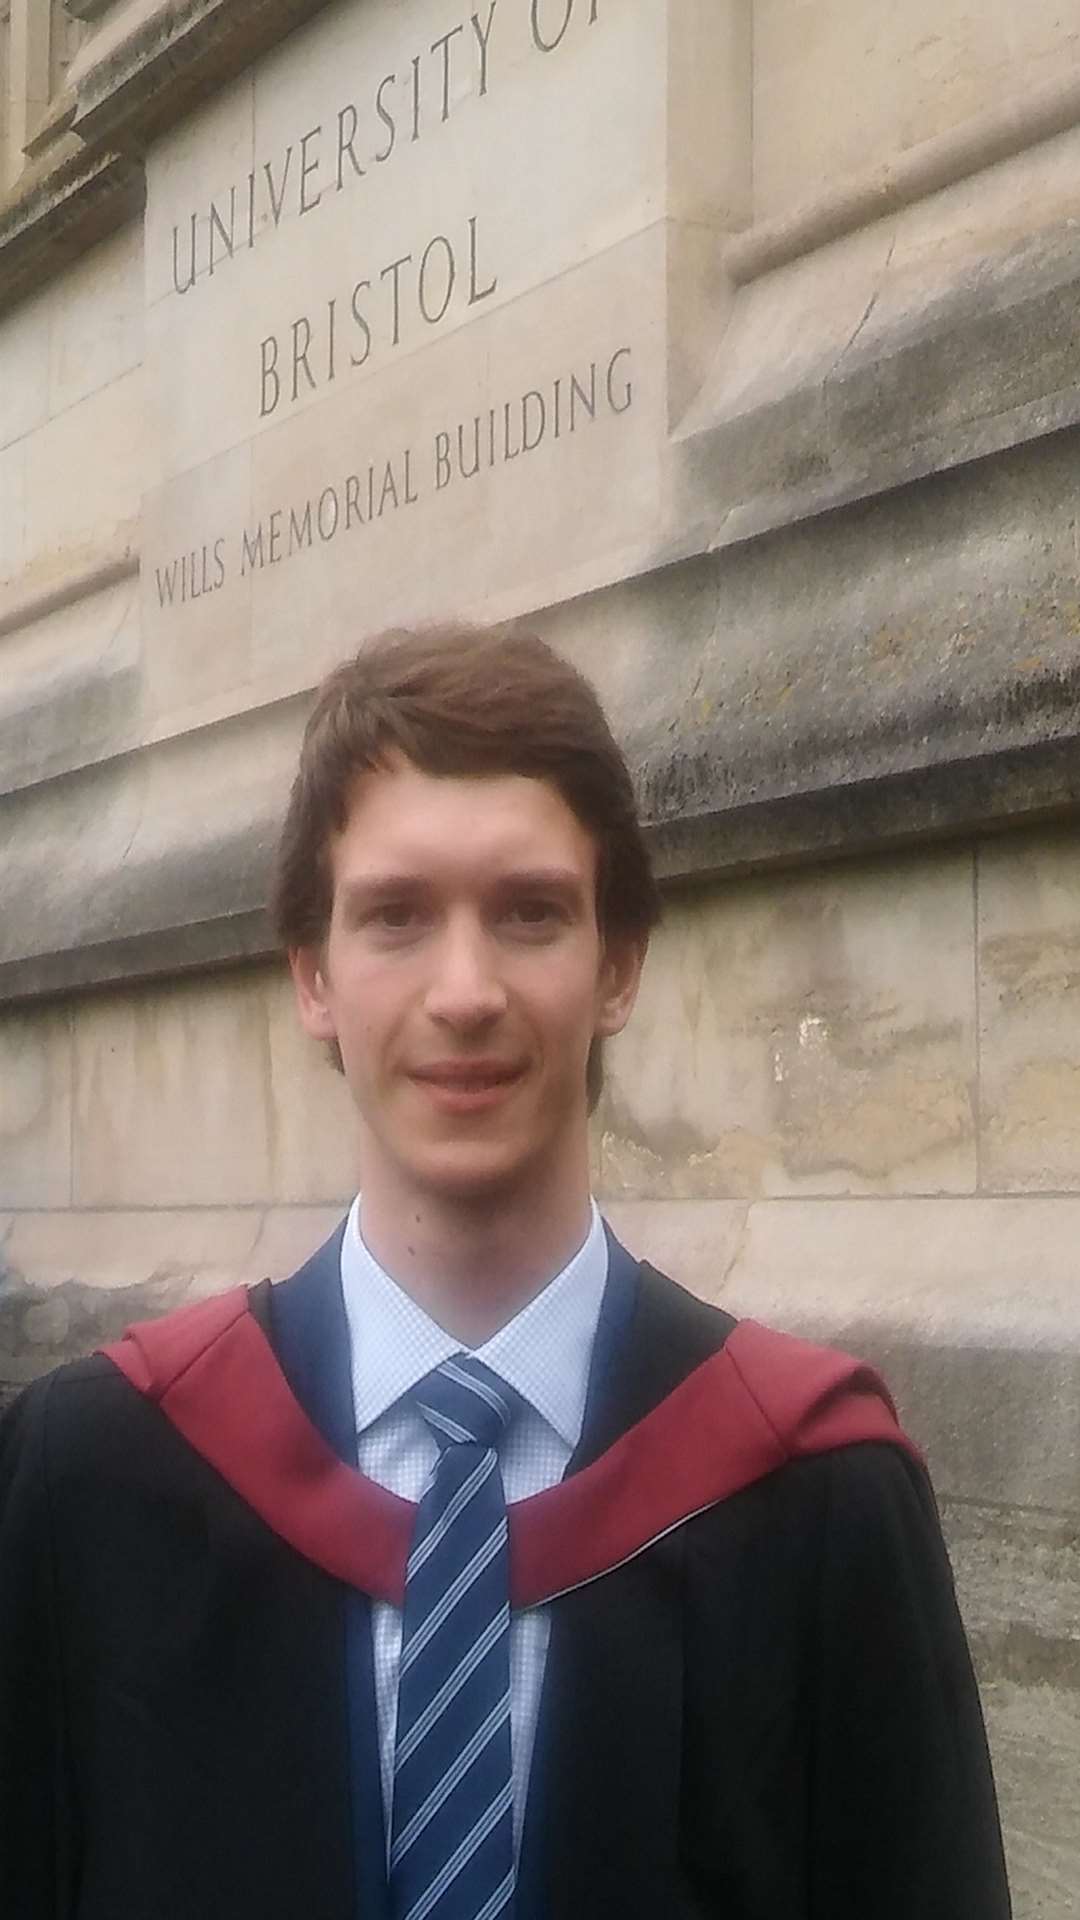 Joshua Mudie on his graduation day